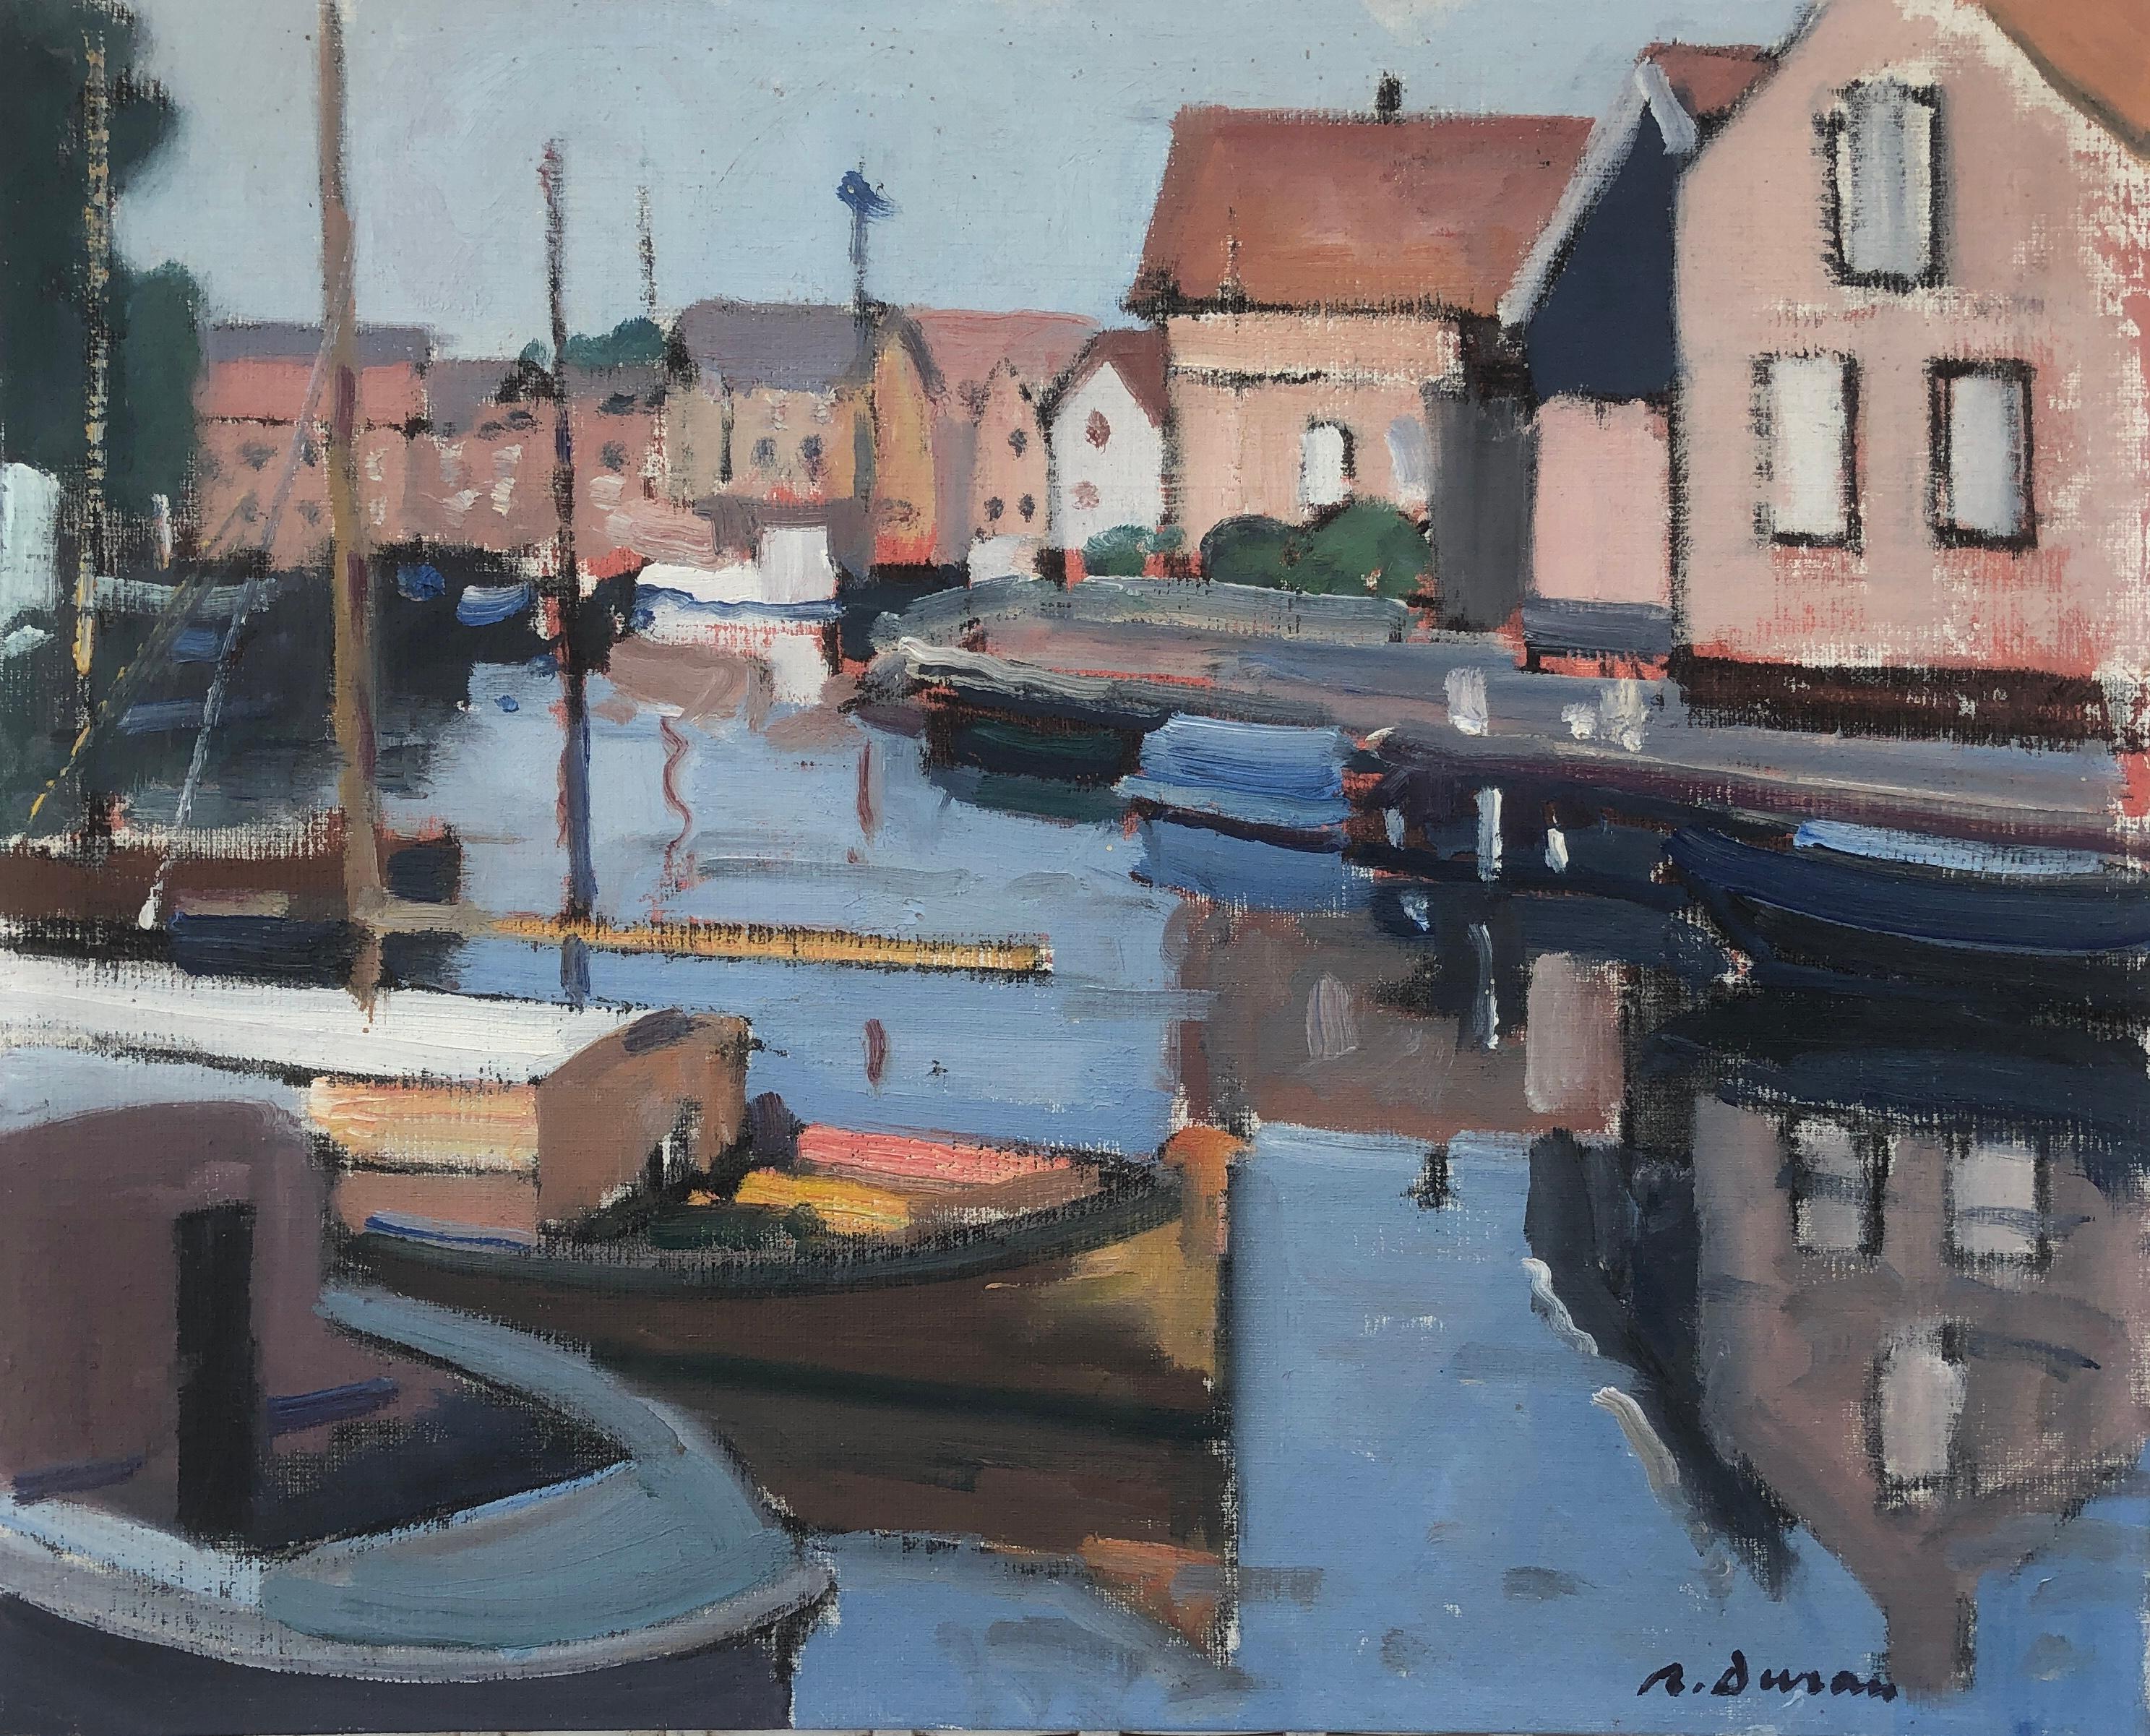 Landscape Painting Rafael Duran Benet - Spakenburg Pays-Bas peinture à l'huile paysage marin paysage urbain